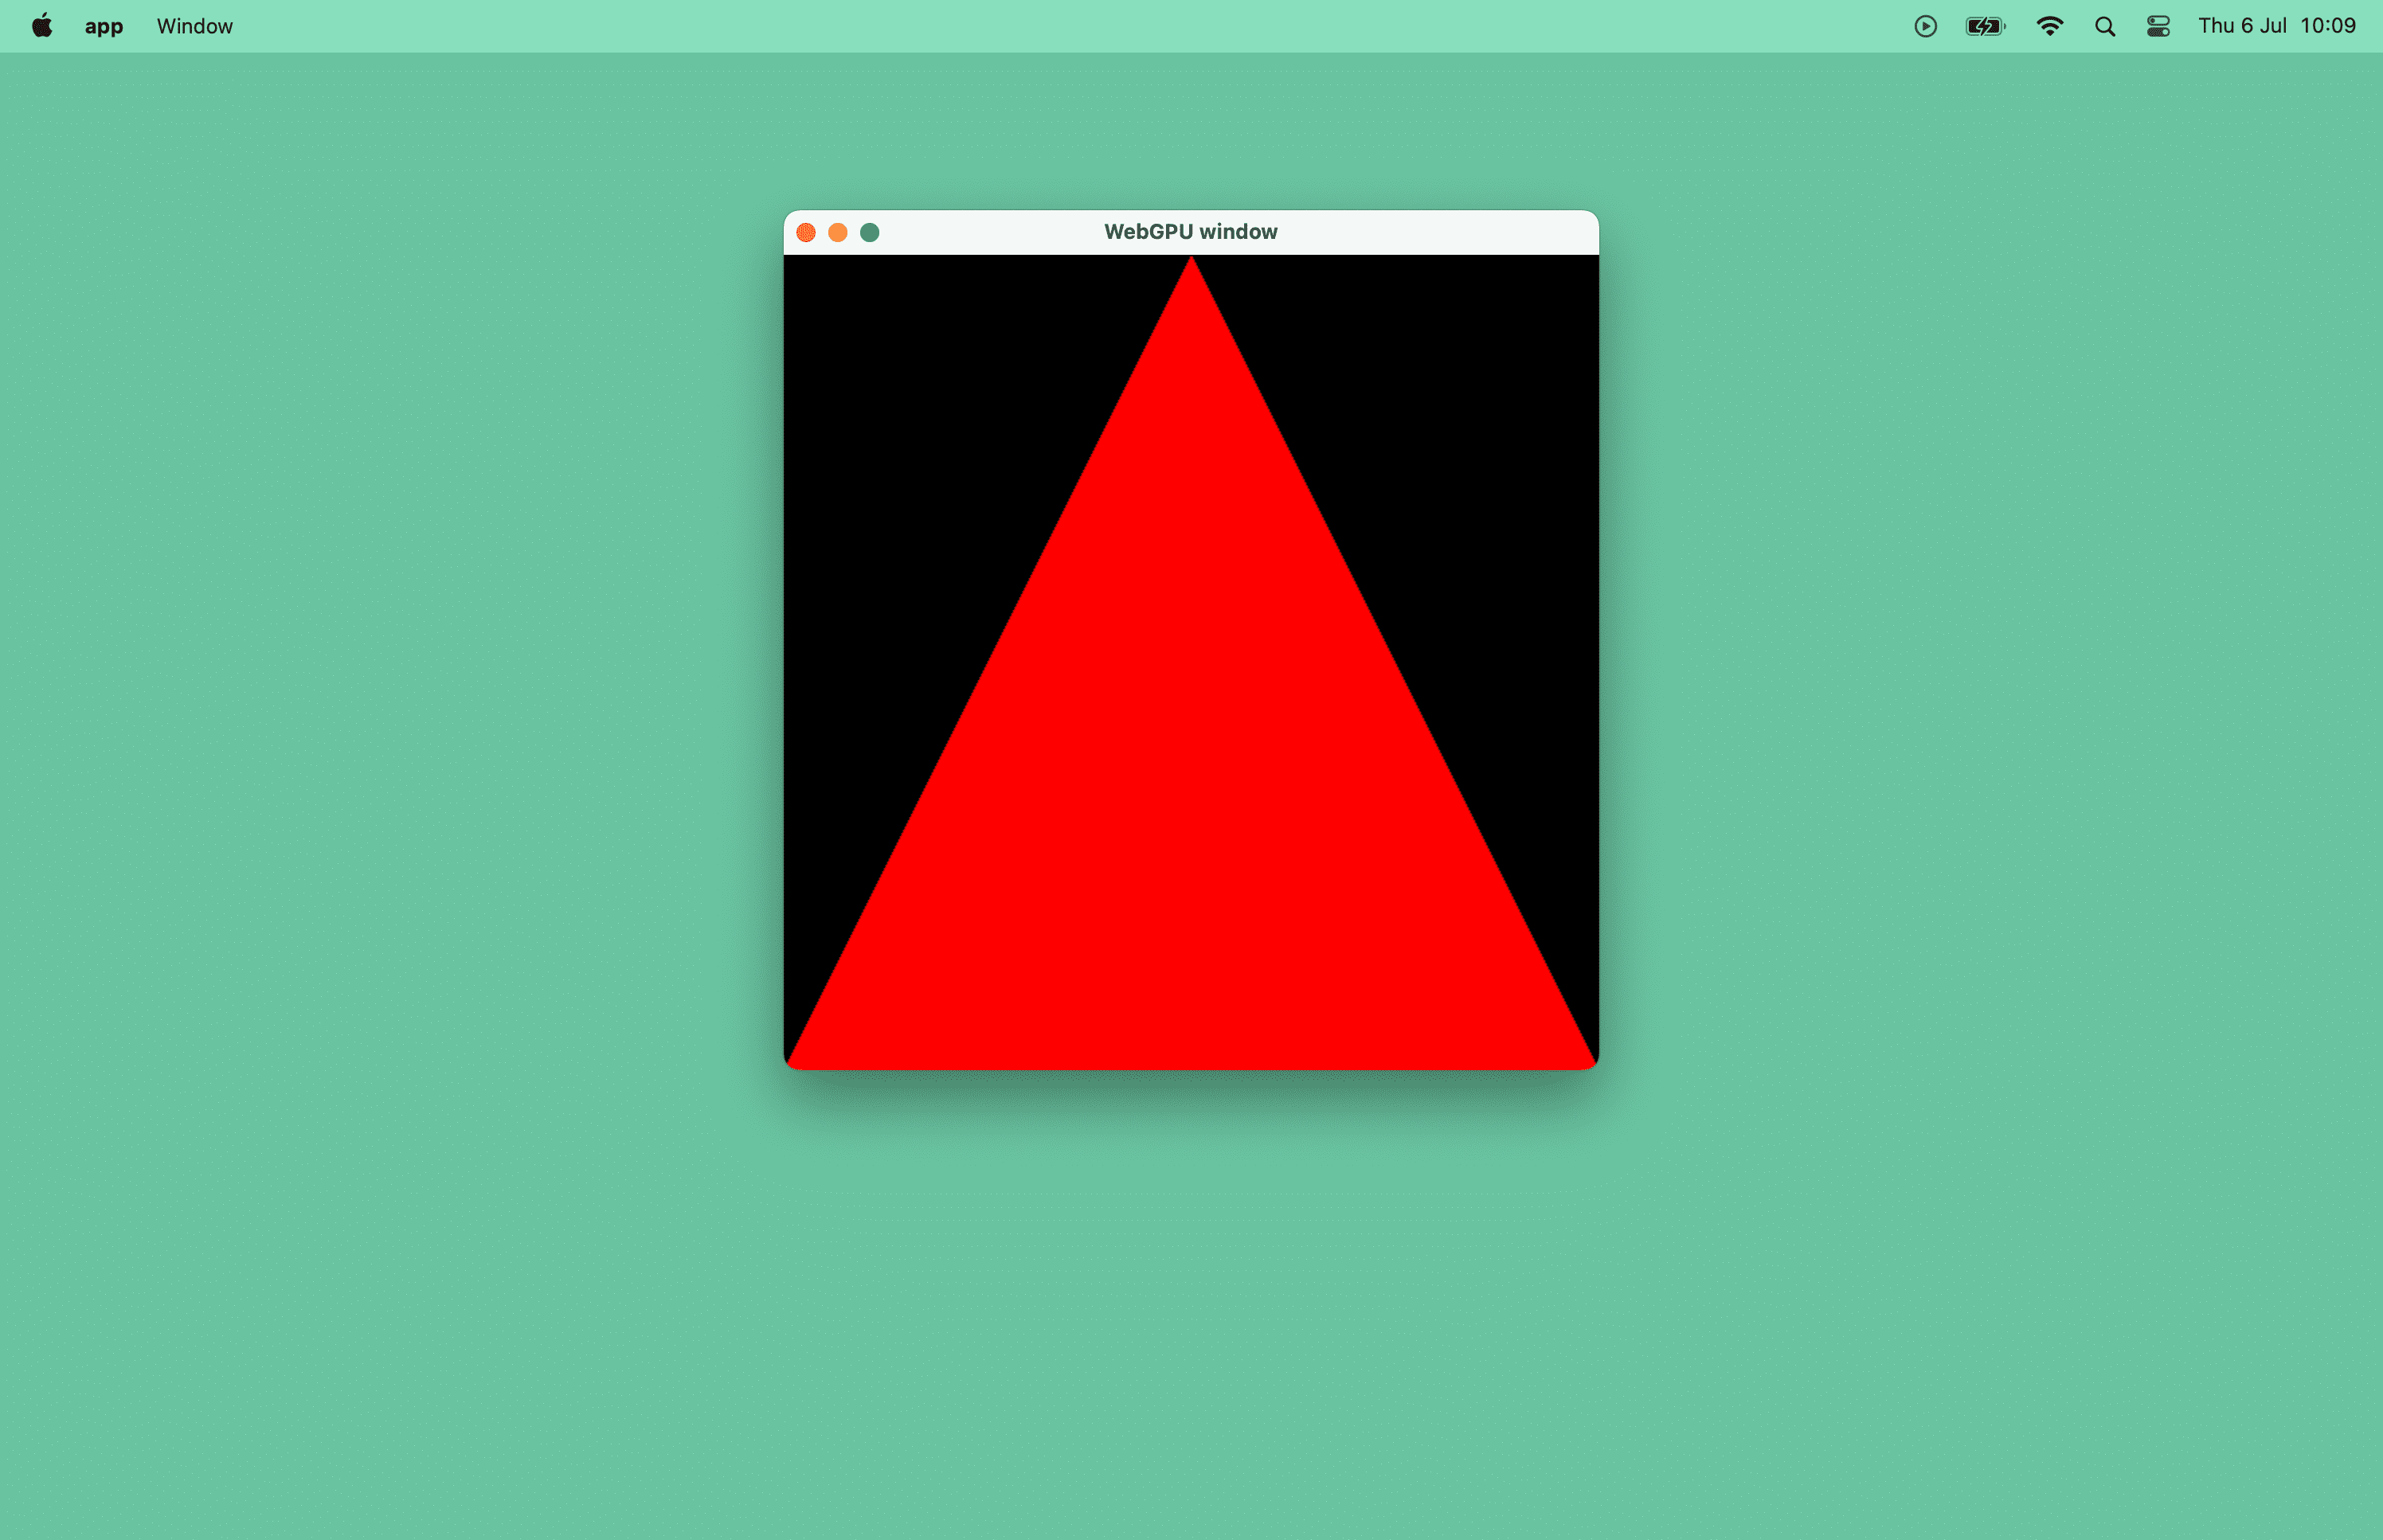 Screenshot di un triangolo rosso in una finestra di macOS.